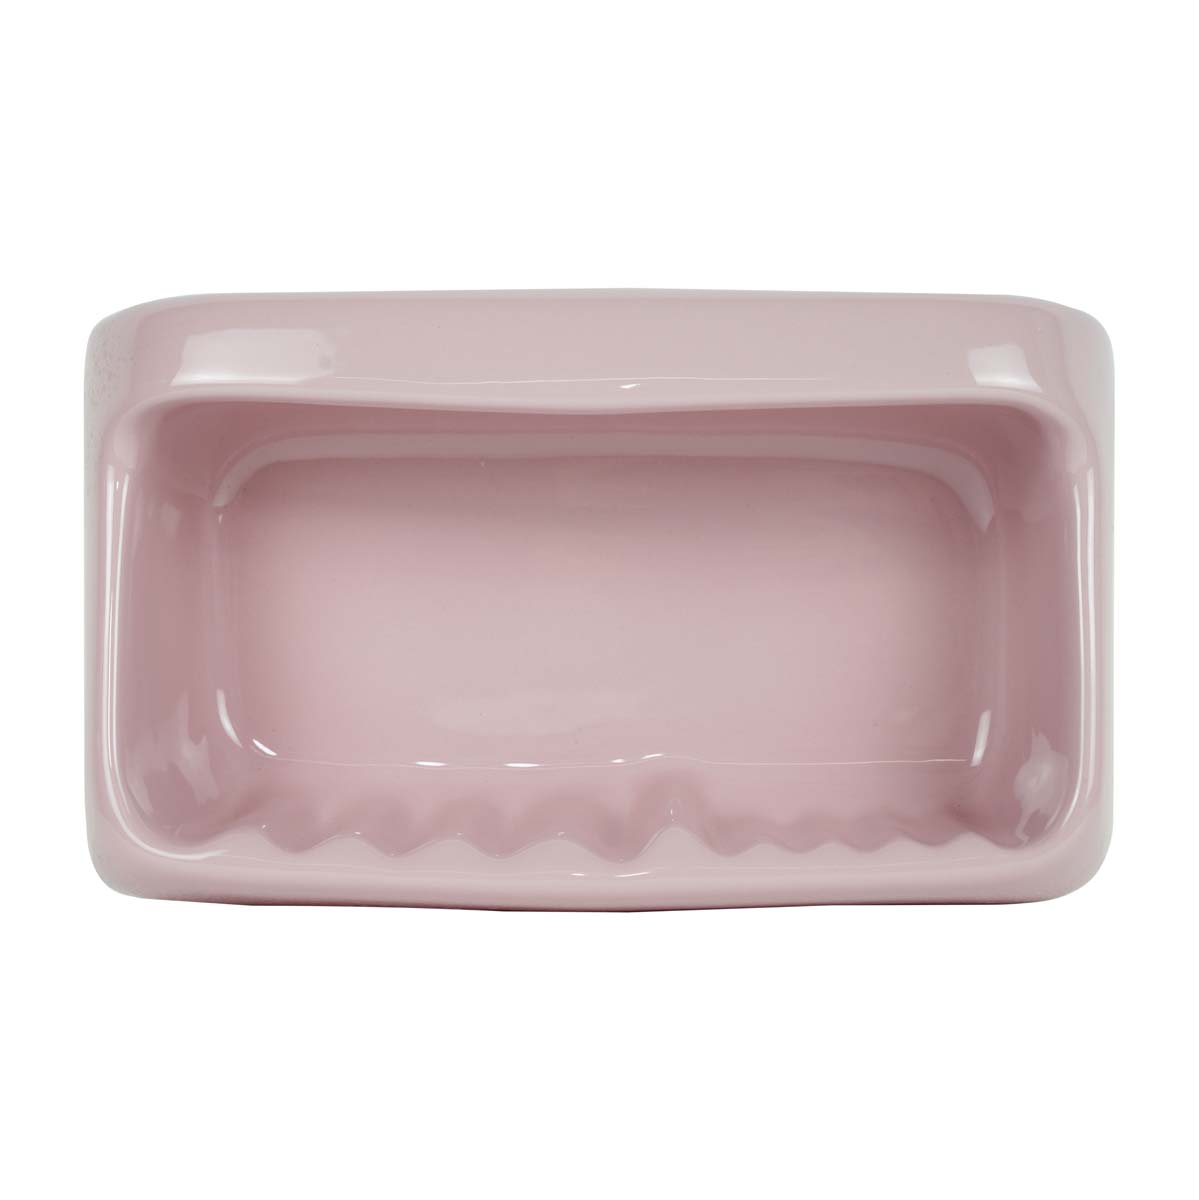 Black Ceramic Soap Dish Tray Shower Bathtub Vintage Mid Century Modern  Kohler Color K111